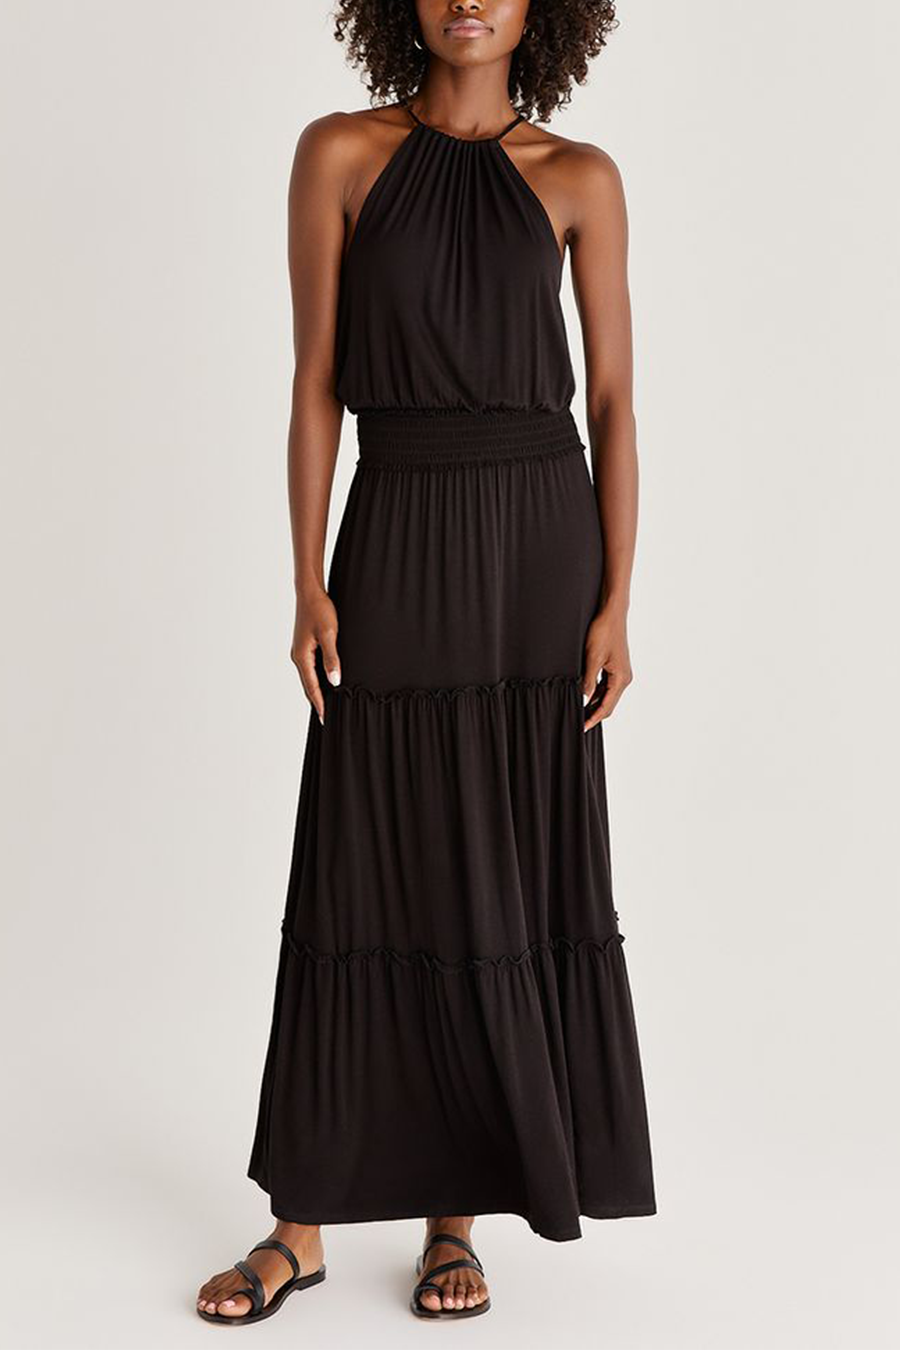 Beverly Sleek Dress | Black - Main Image Number 1 of 2